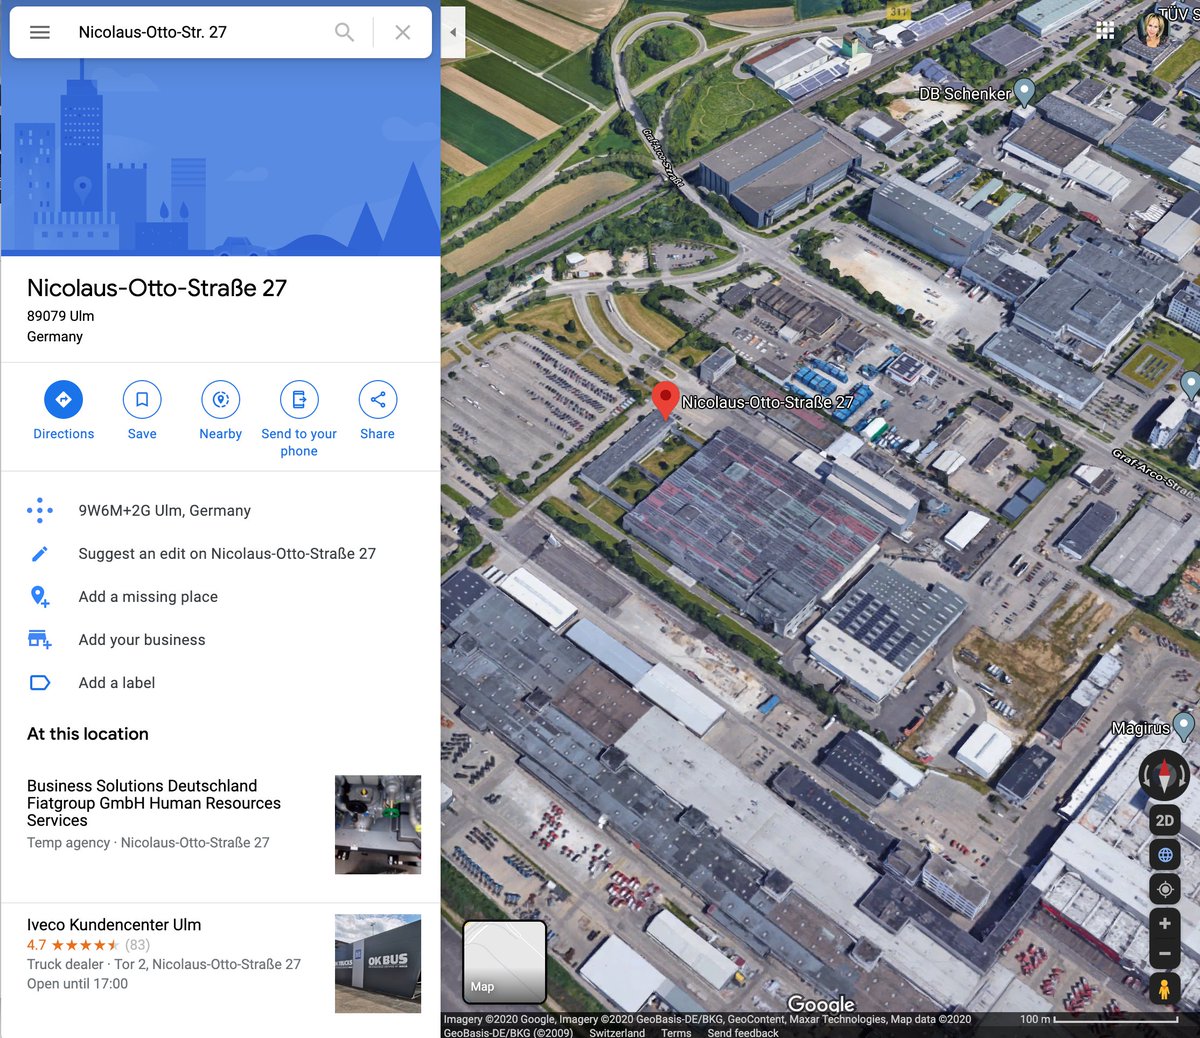 Here is the exact location of that "future" factory:  https://goo.gl/maps/HWVsYmaUioxwYwWS9